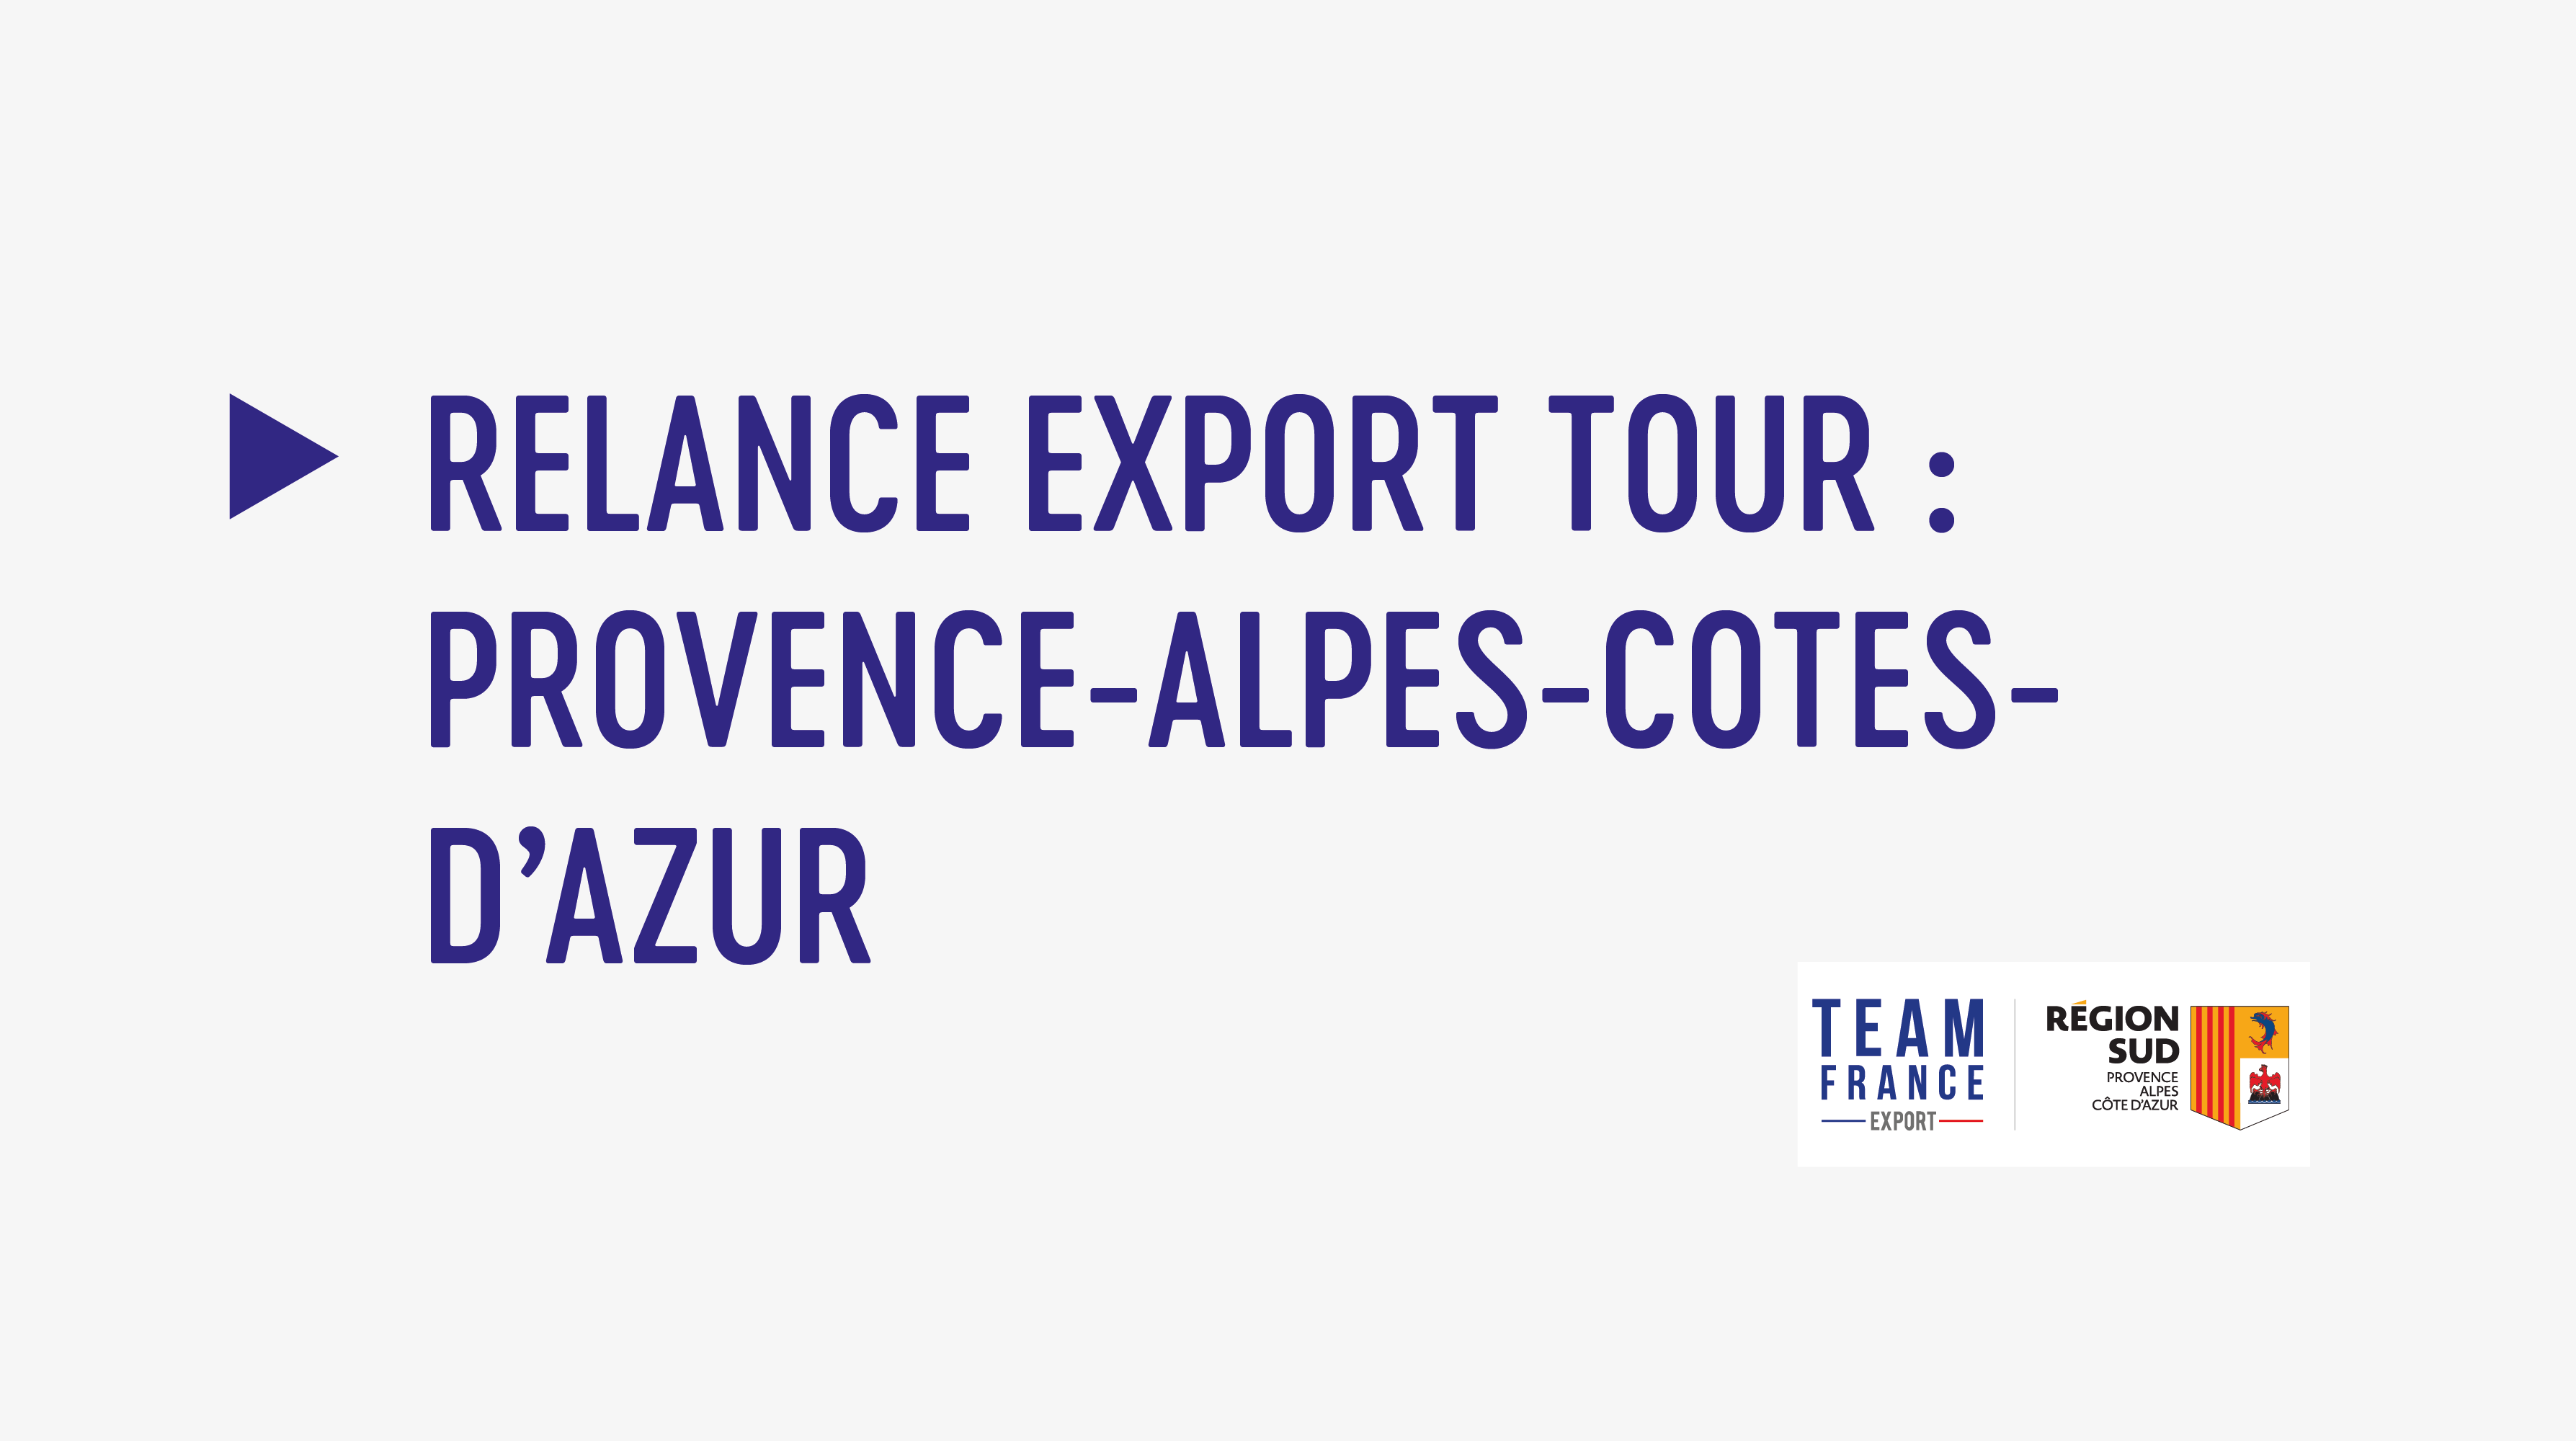 Team France Export PACA